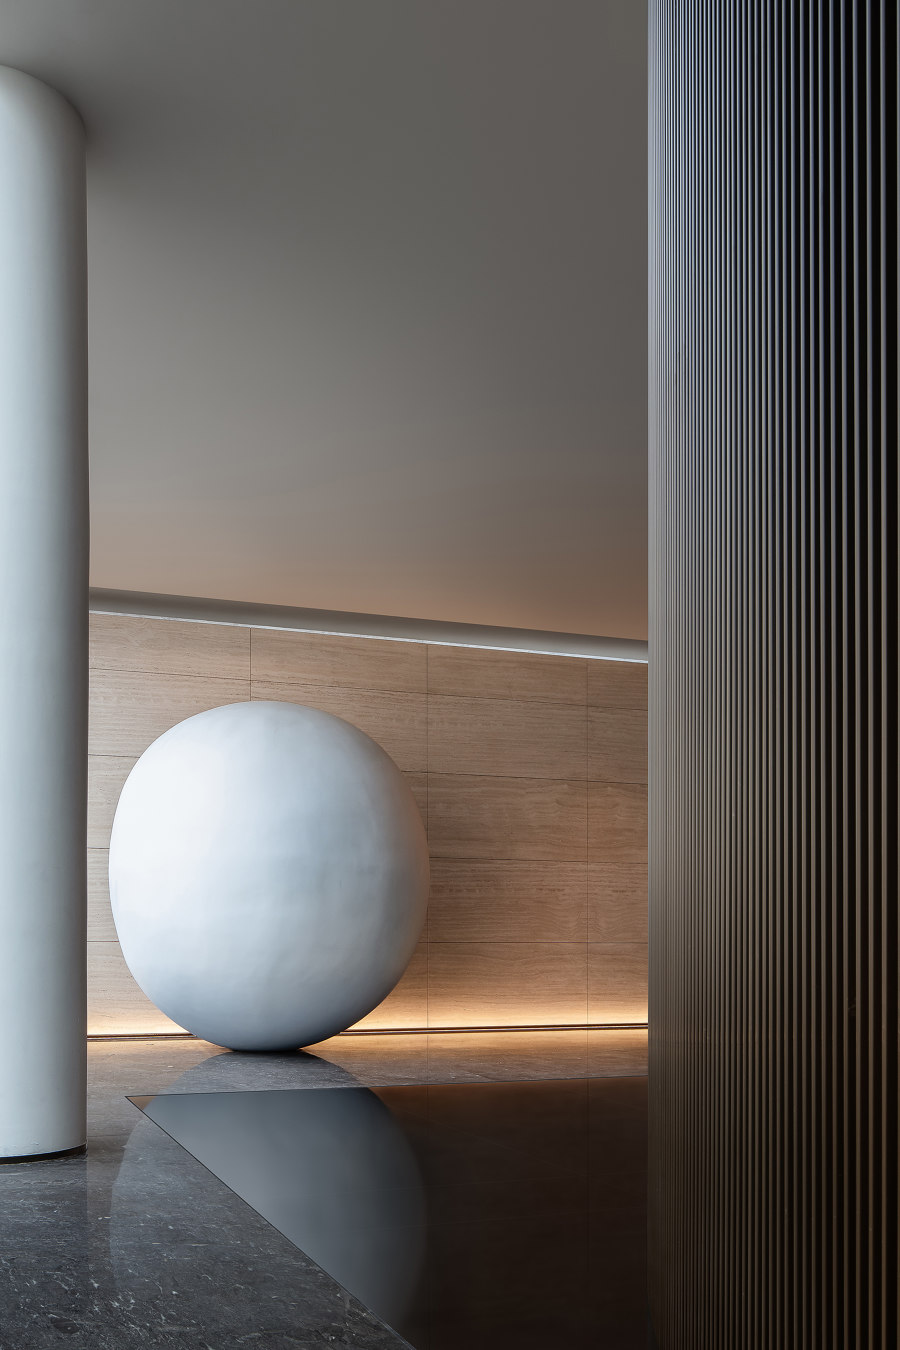 Sunac • Grand Milestone Modern Art Center de CCD/Cheng Chung Design | Museos